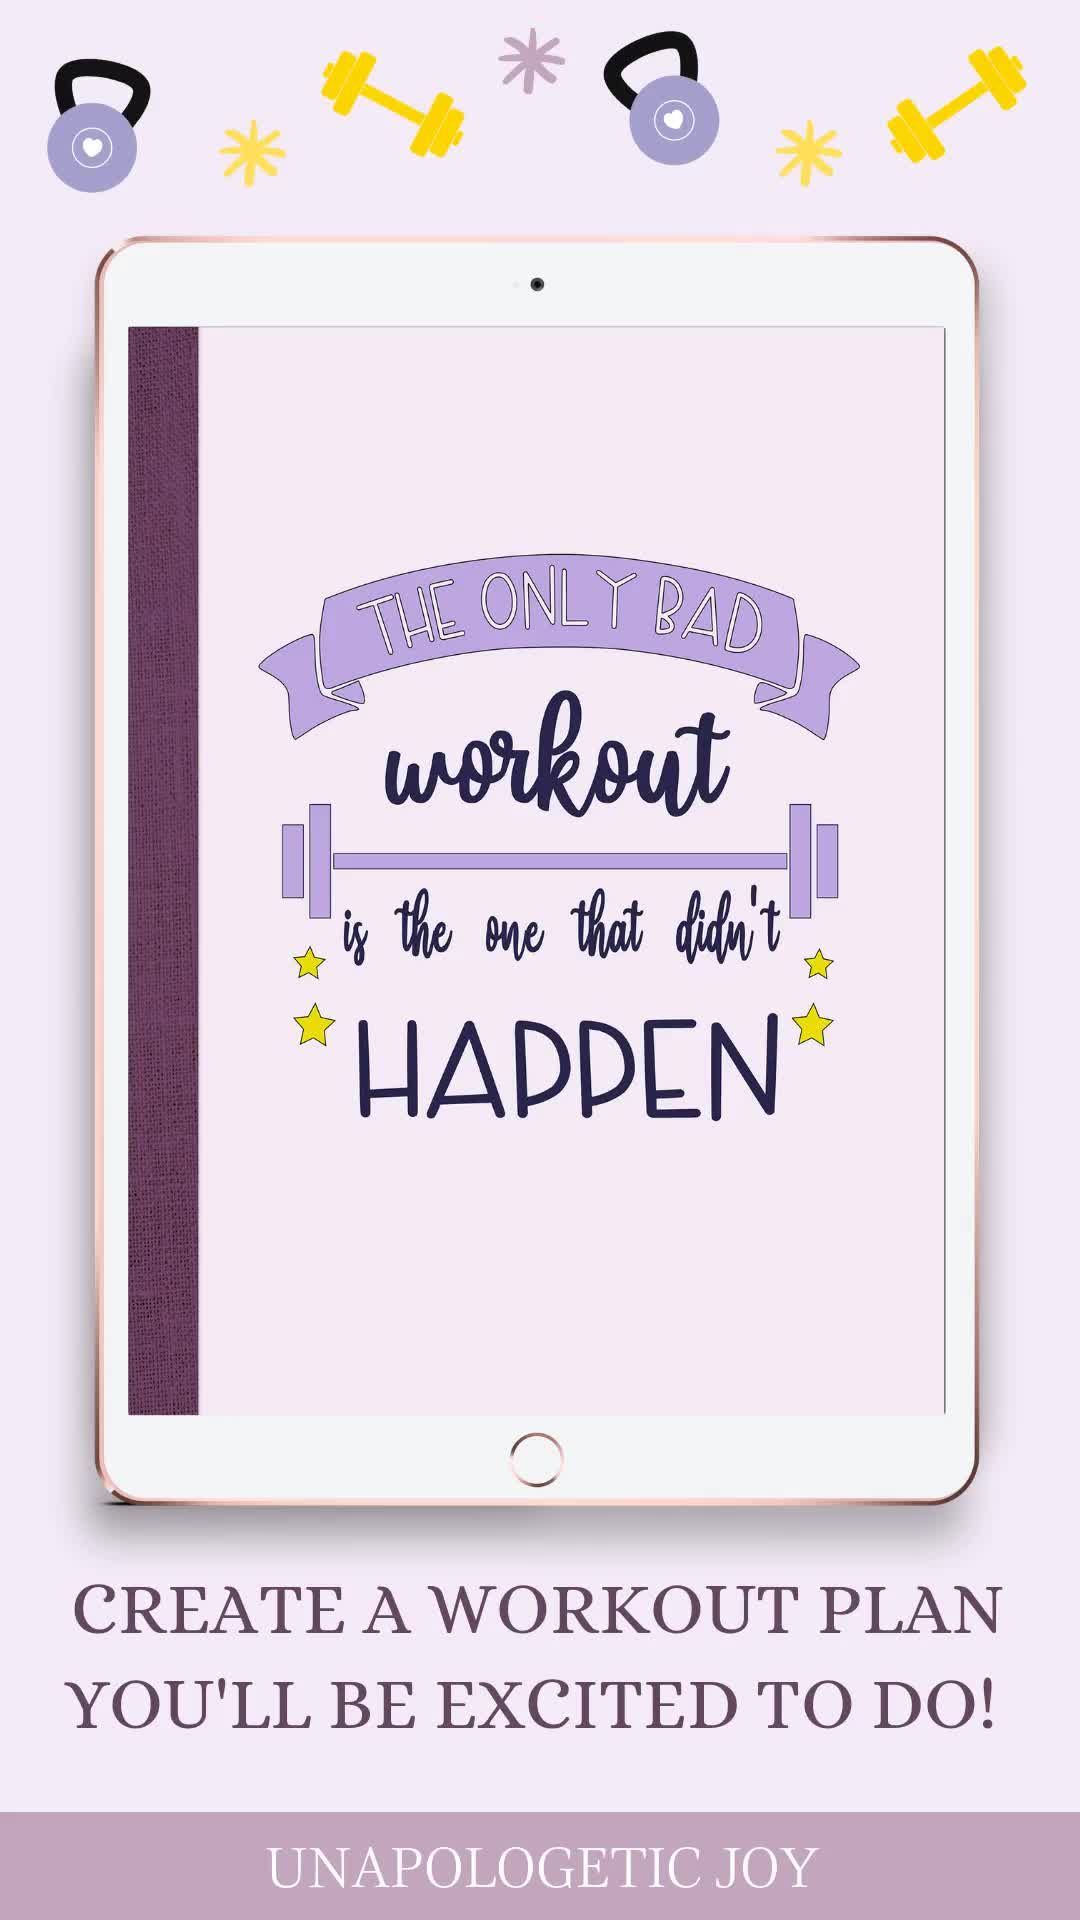 No Bad Workout Digital Fitness Planner - No Bad Workout Digital Fitness Planner -   fitness Journal beginners